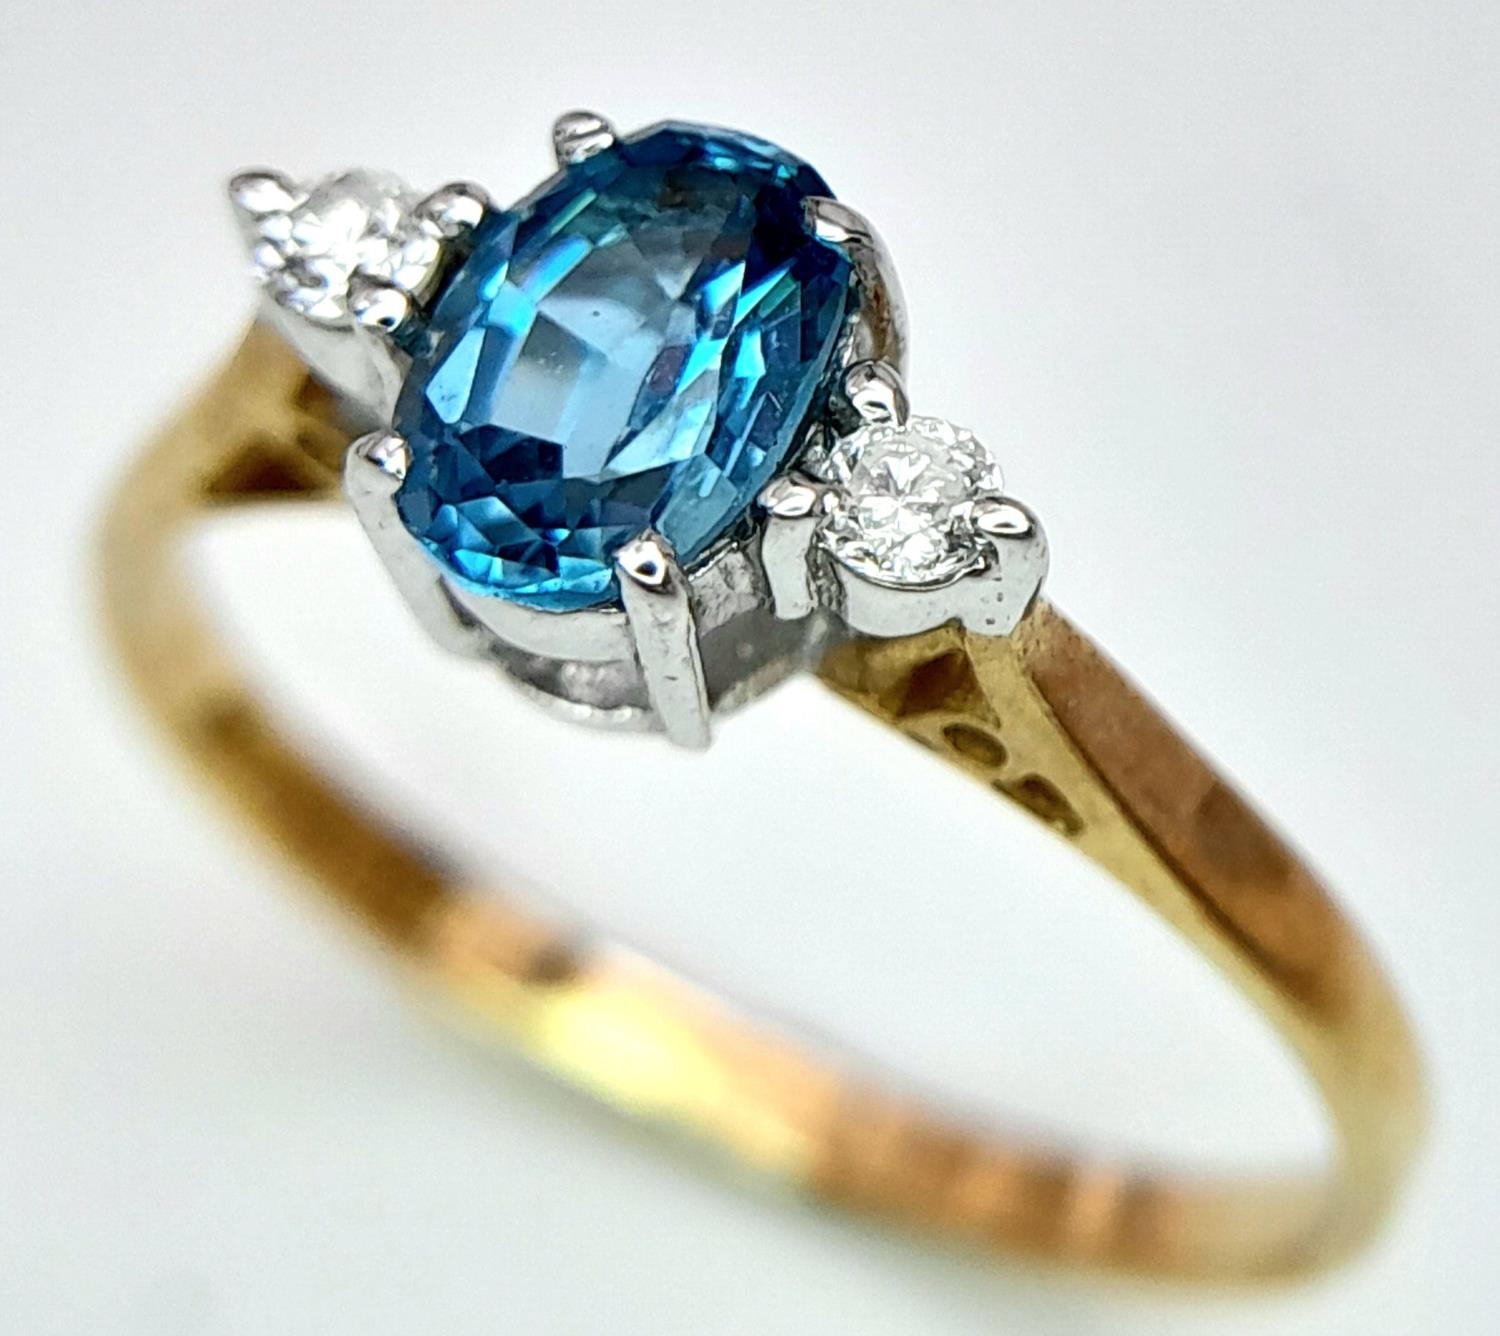 A 9K YELLOW GOLD DIAMOND & BLUE TOPAZ 3 STONE RING 1.4G SIZE M. ref: SPAS 9012 - Image 2 of 5